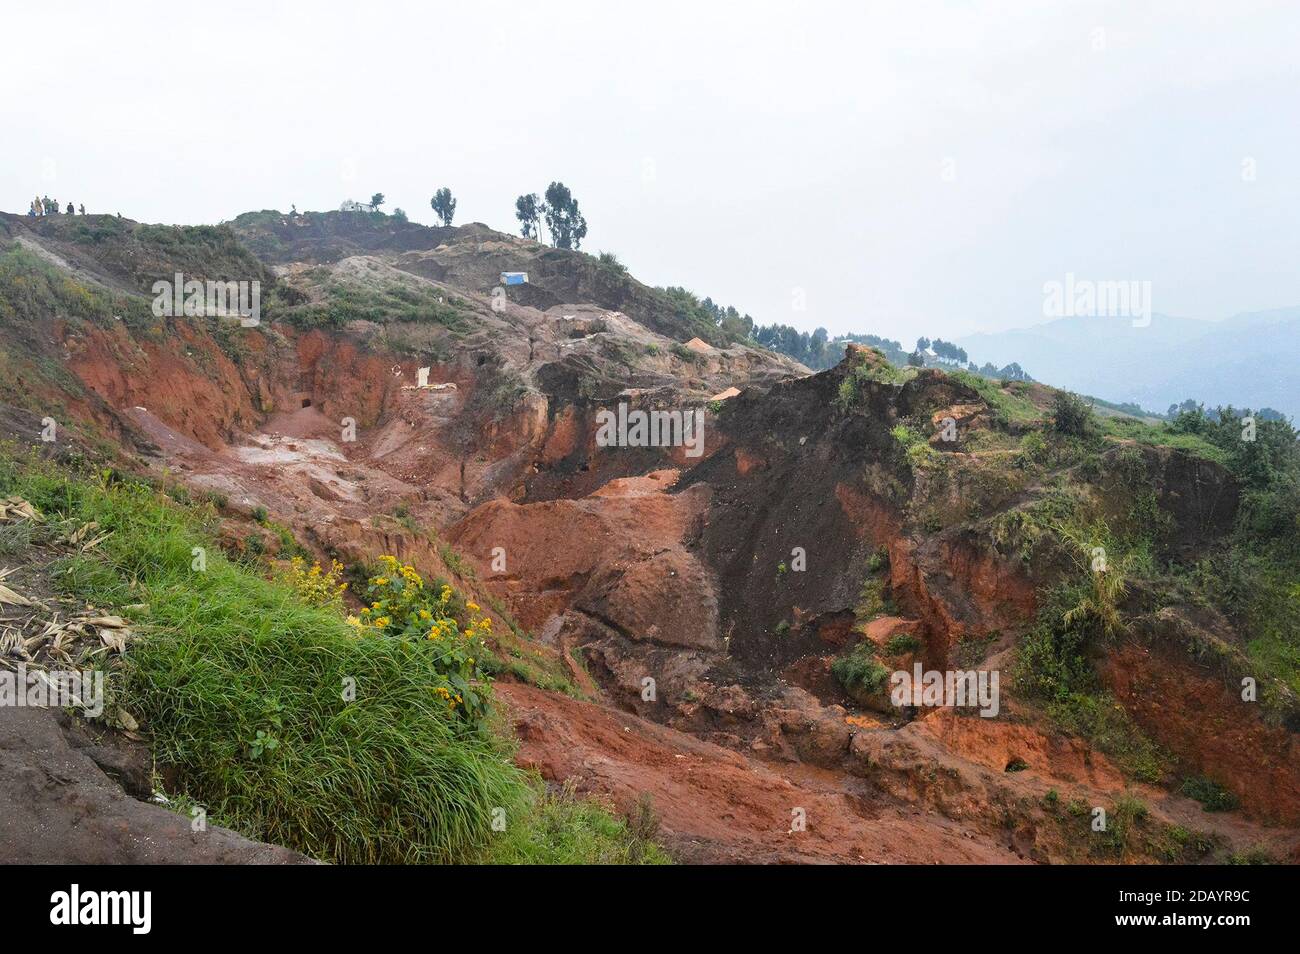 Mines in the Rubaya area of Democratic Republic of Congo. Stock Photo